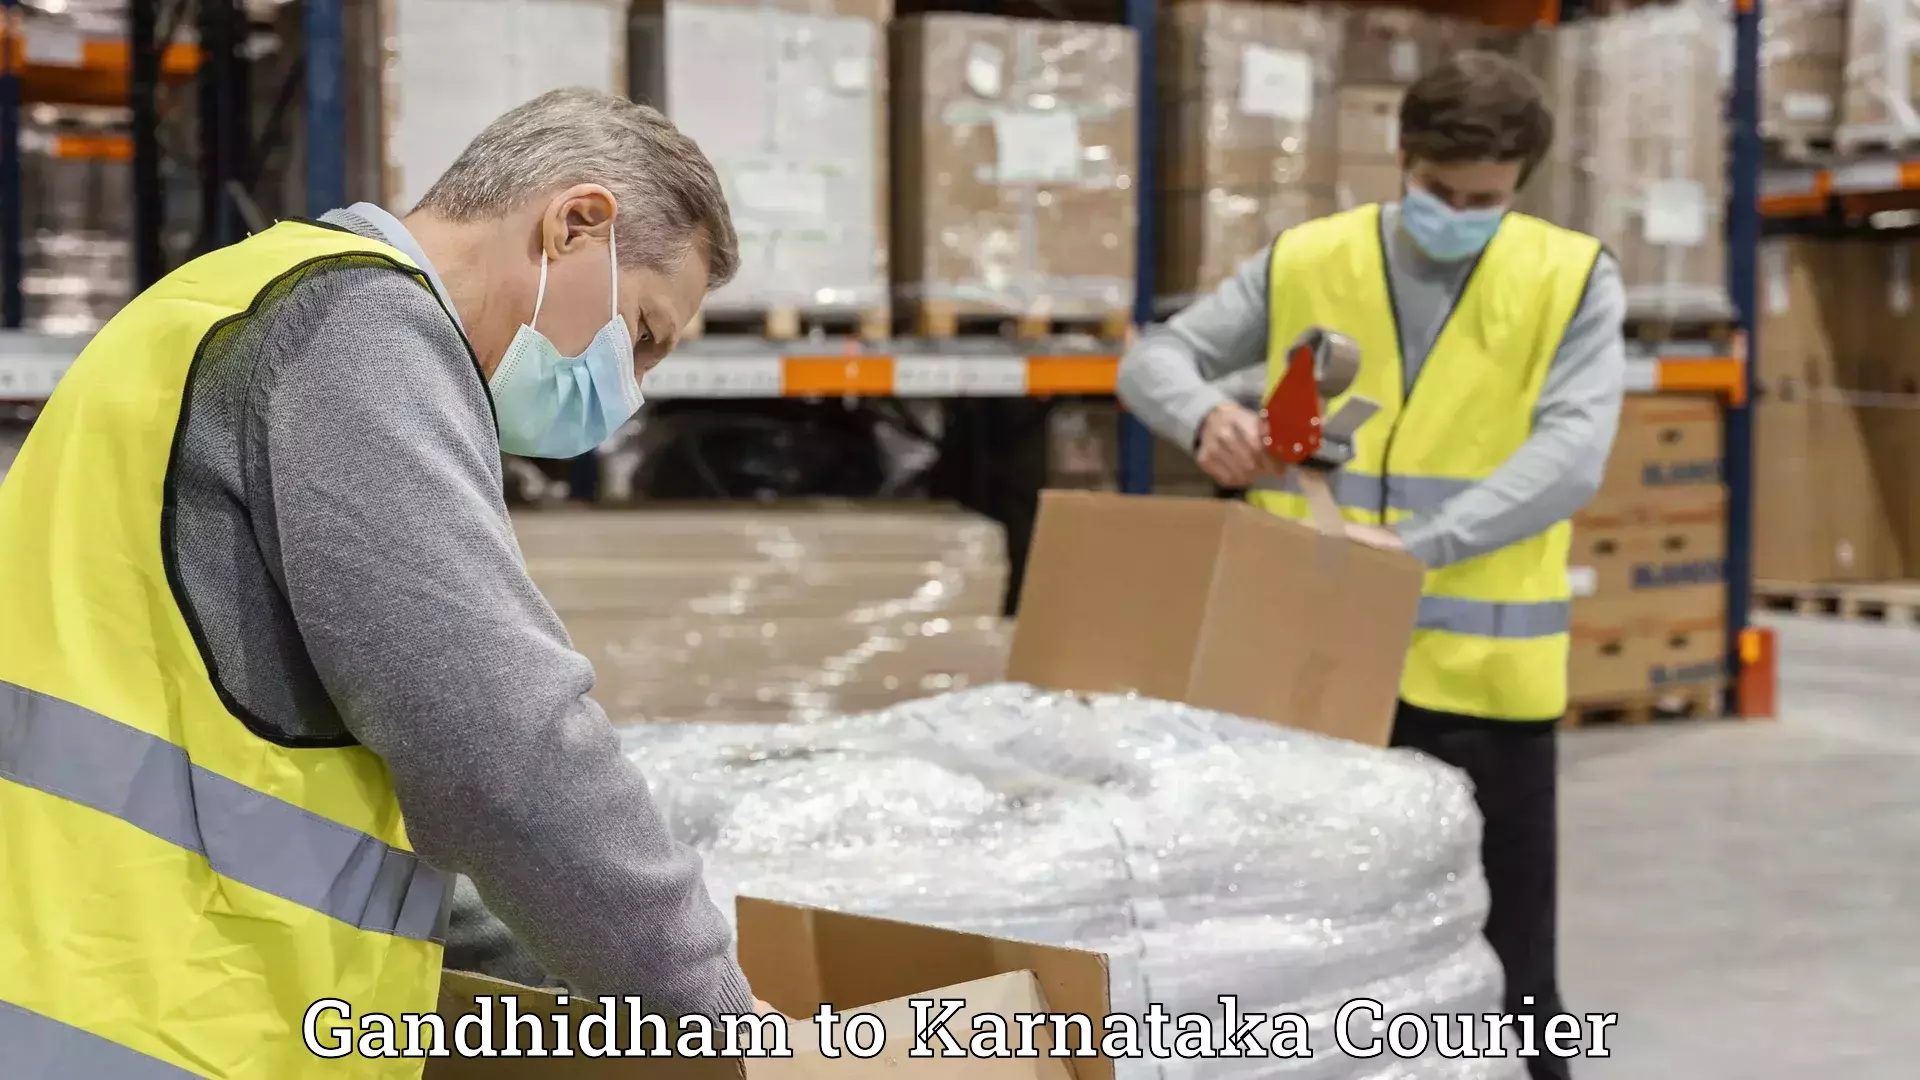 Professional moving company Gandhidham to Karnataka